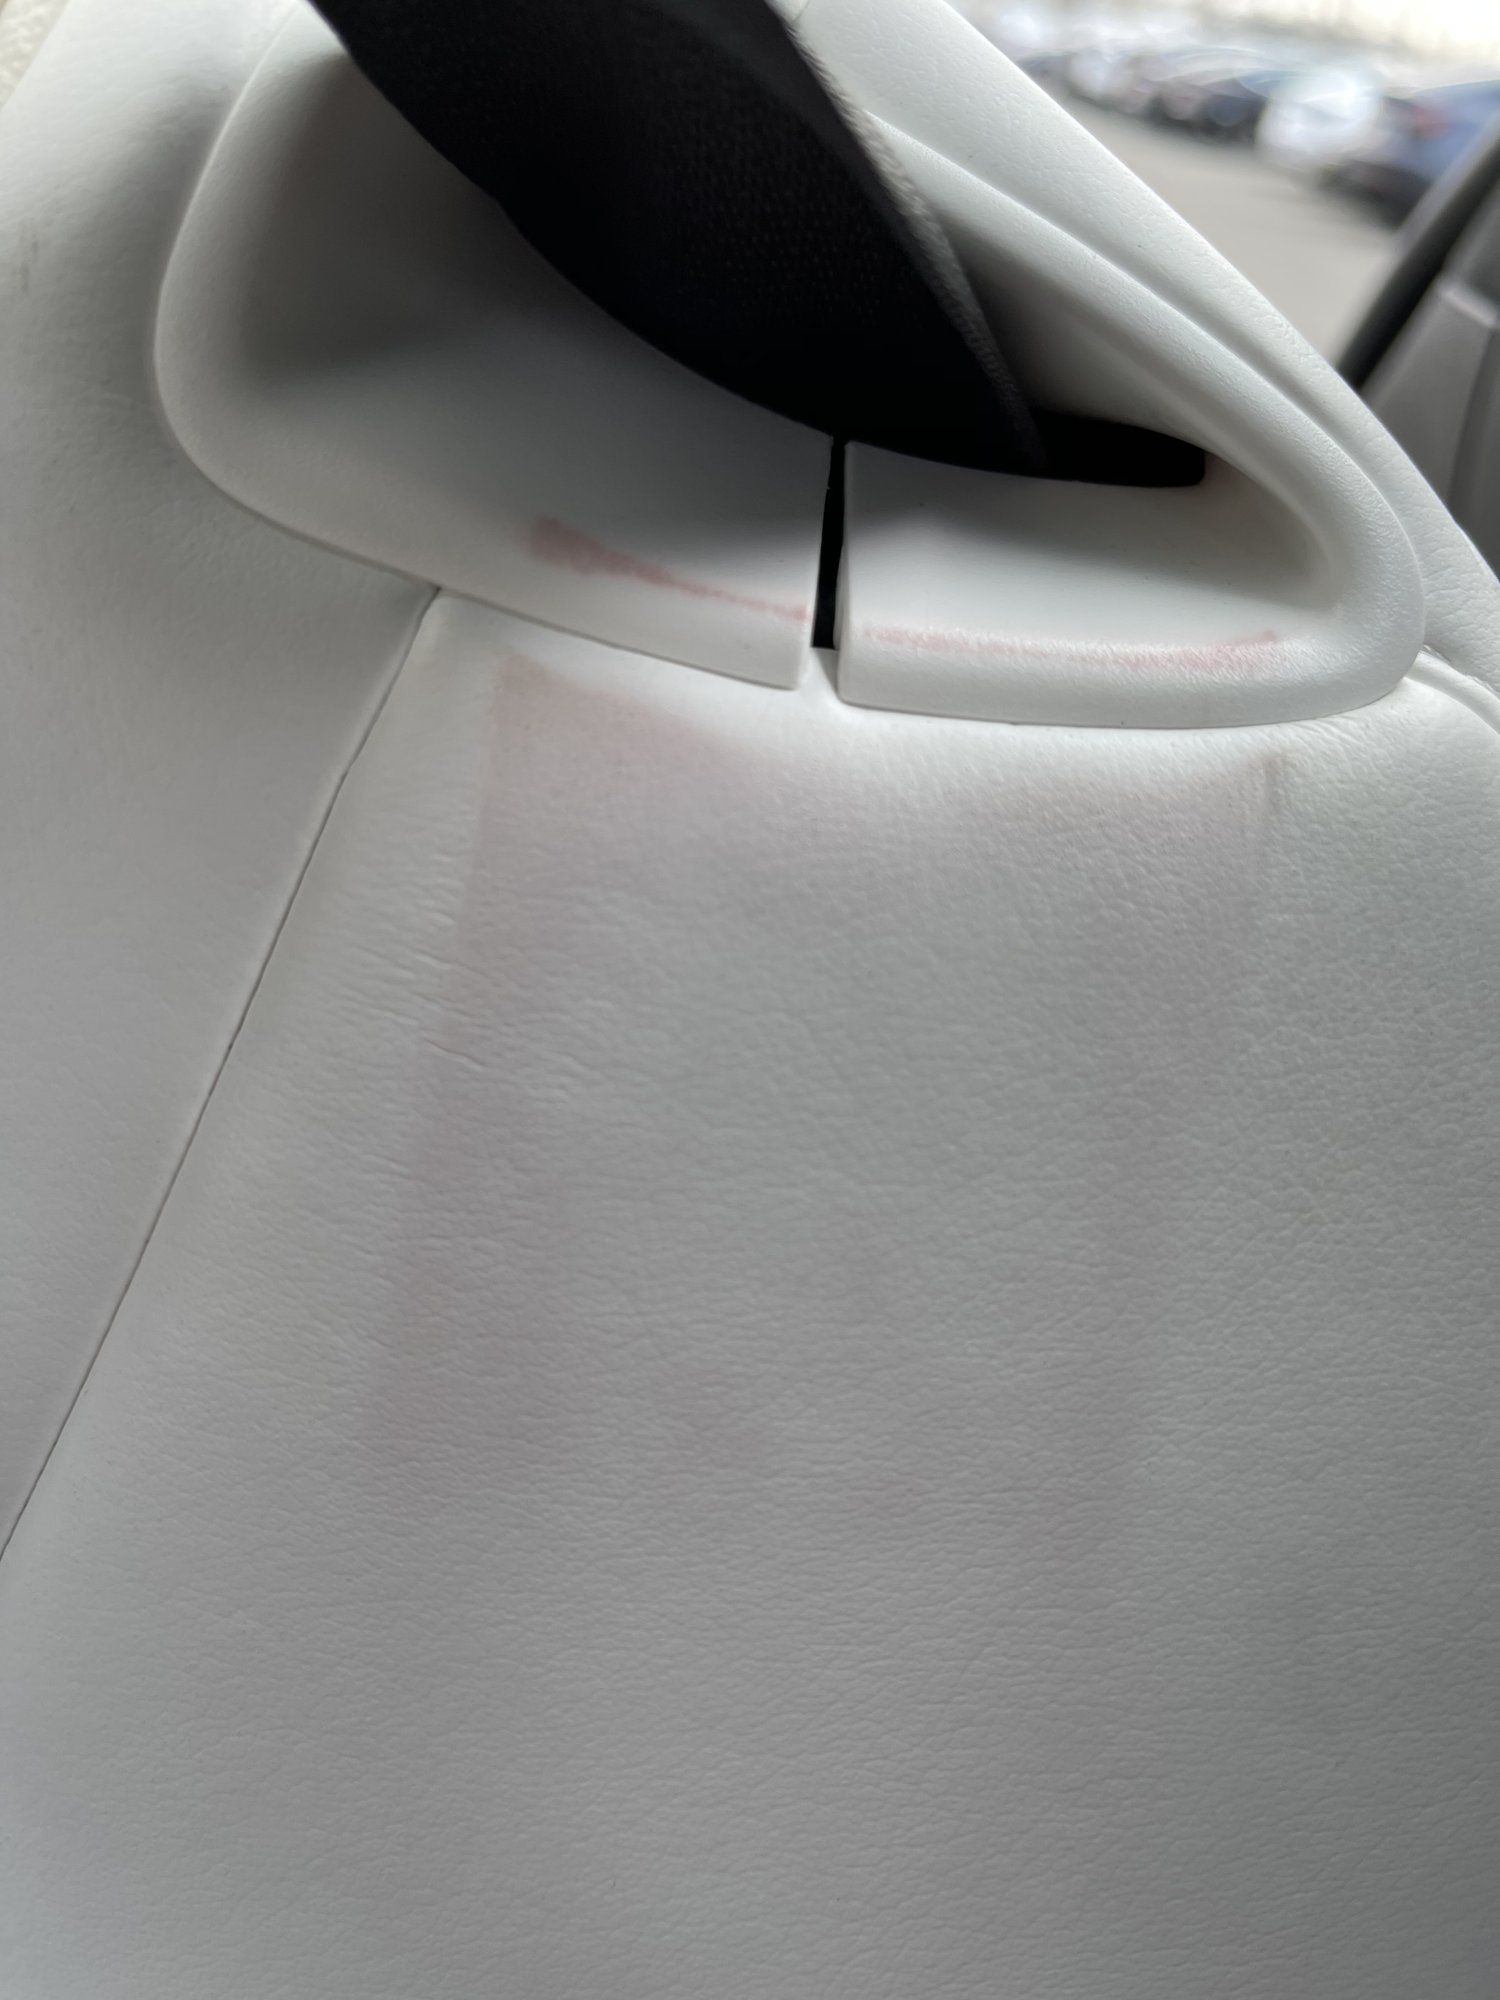 White Seats Stained from Tesla Seatbelts | Tesla Motors Club